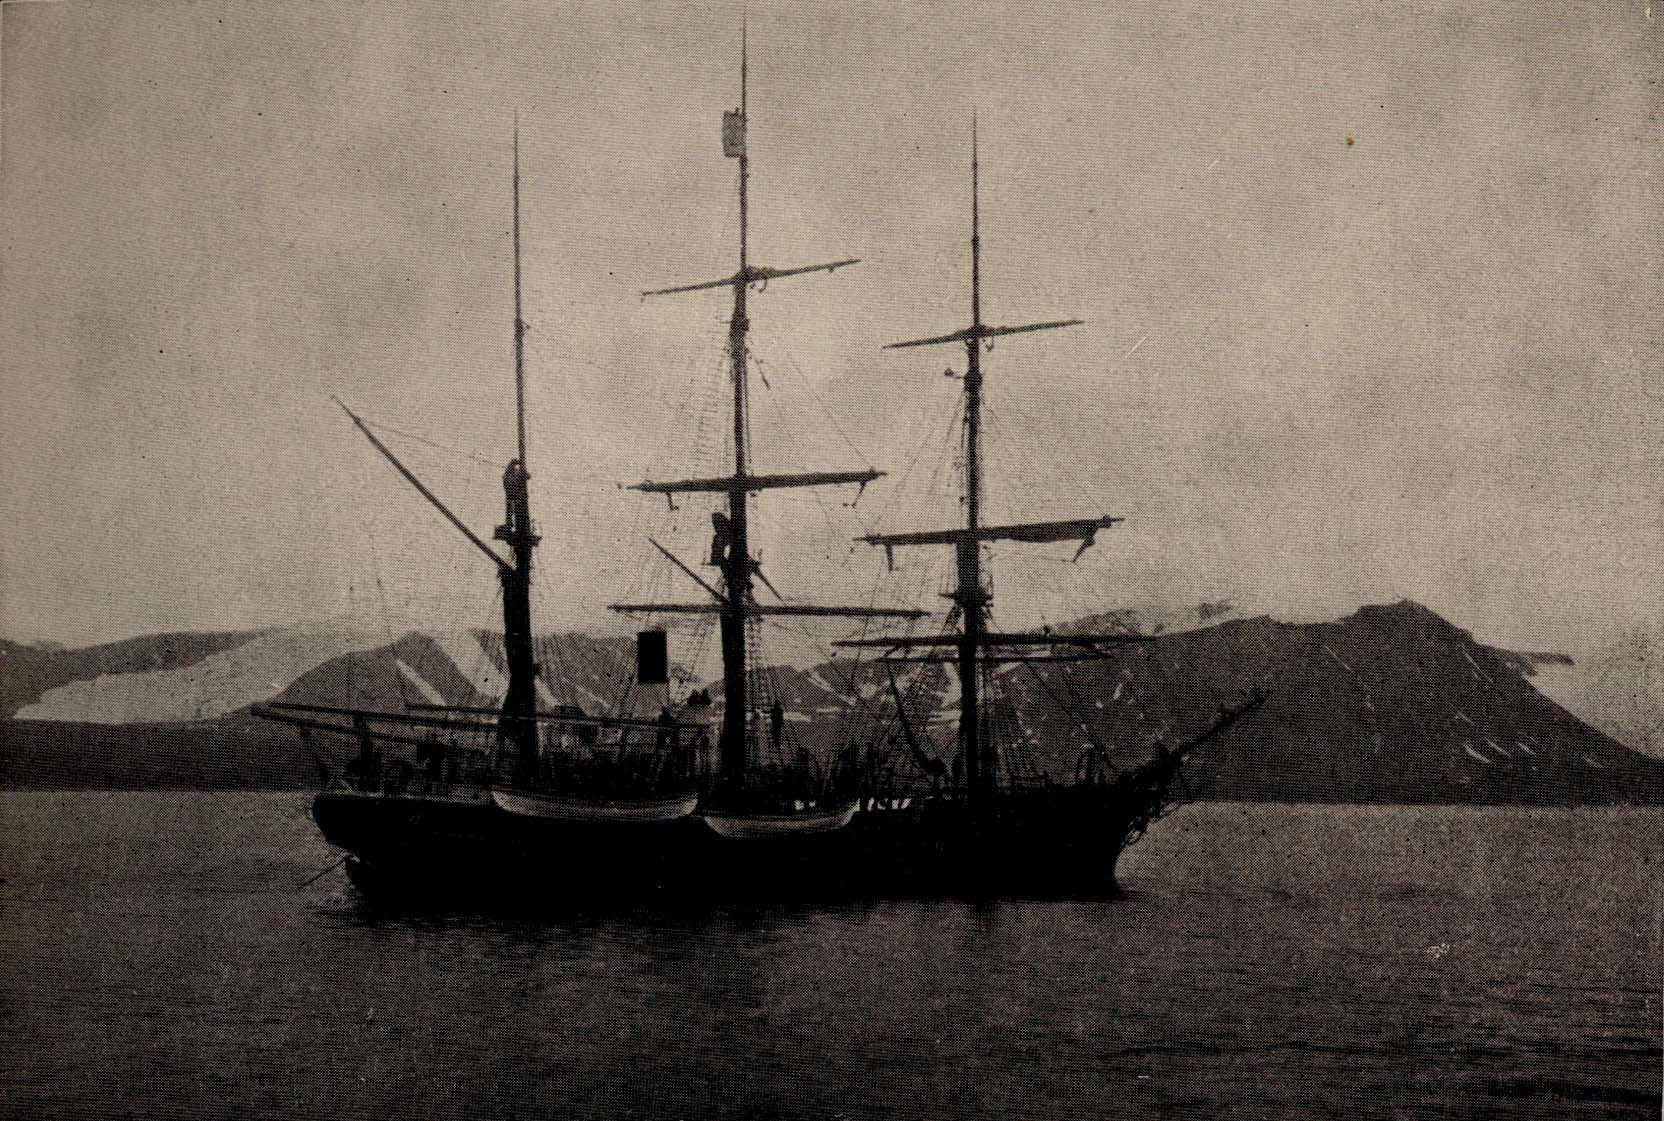 Three masted sailing ship, sails furled.